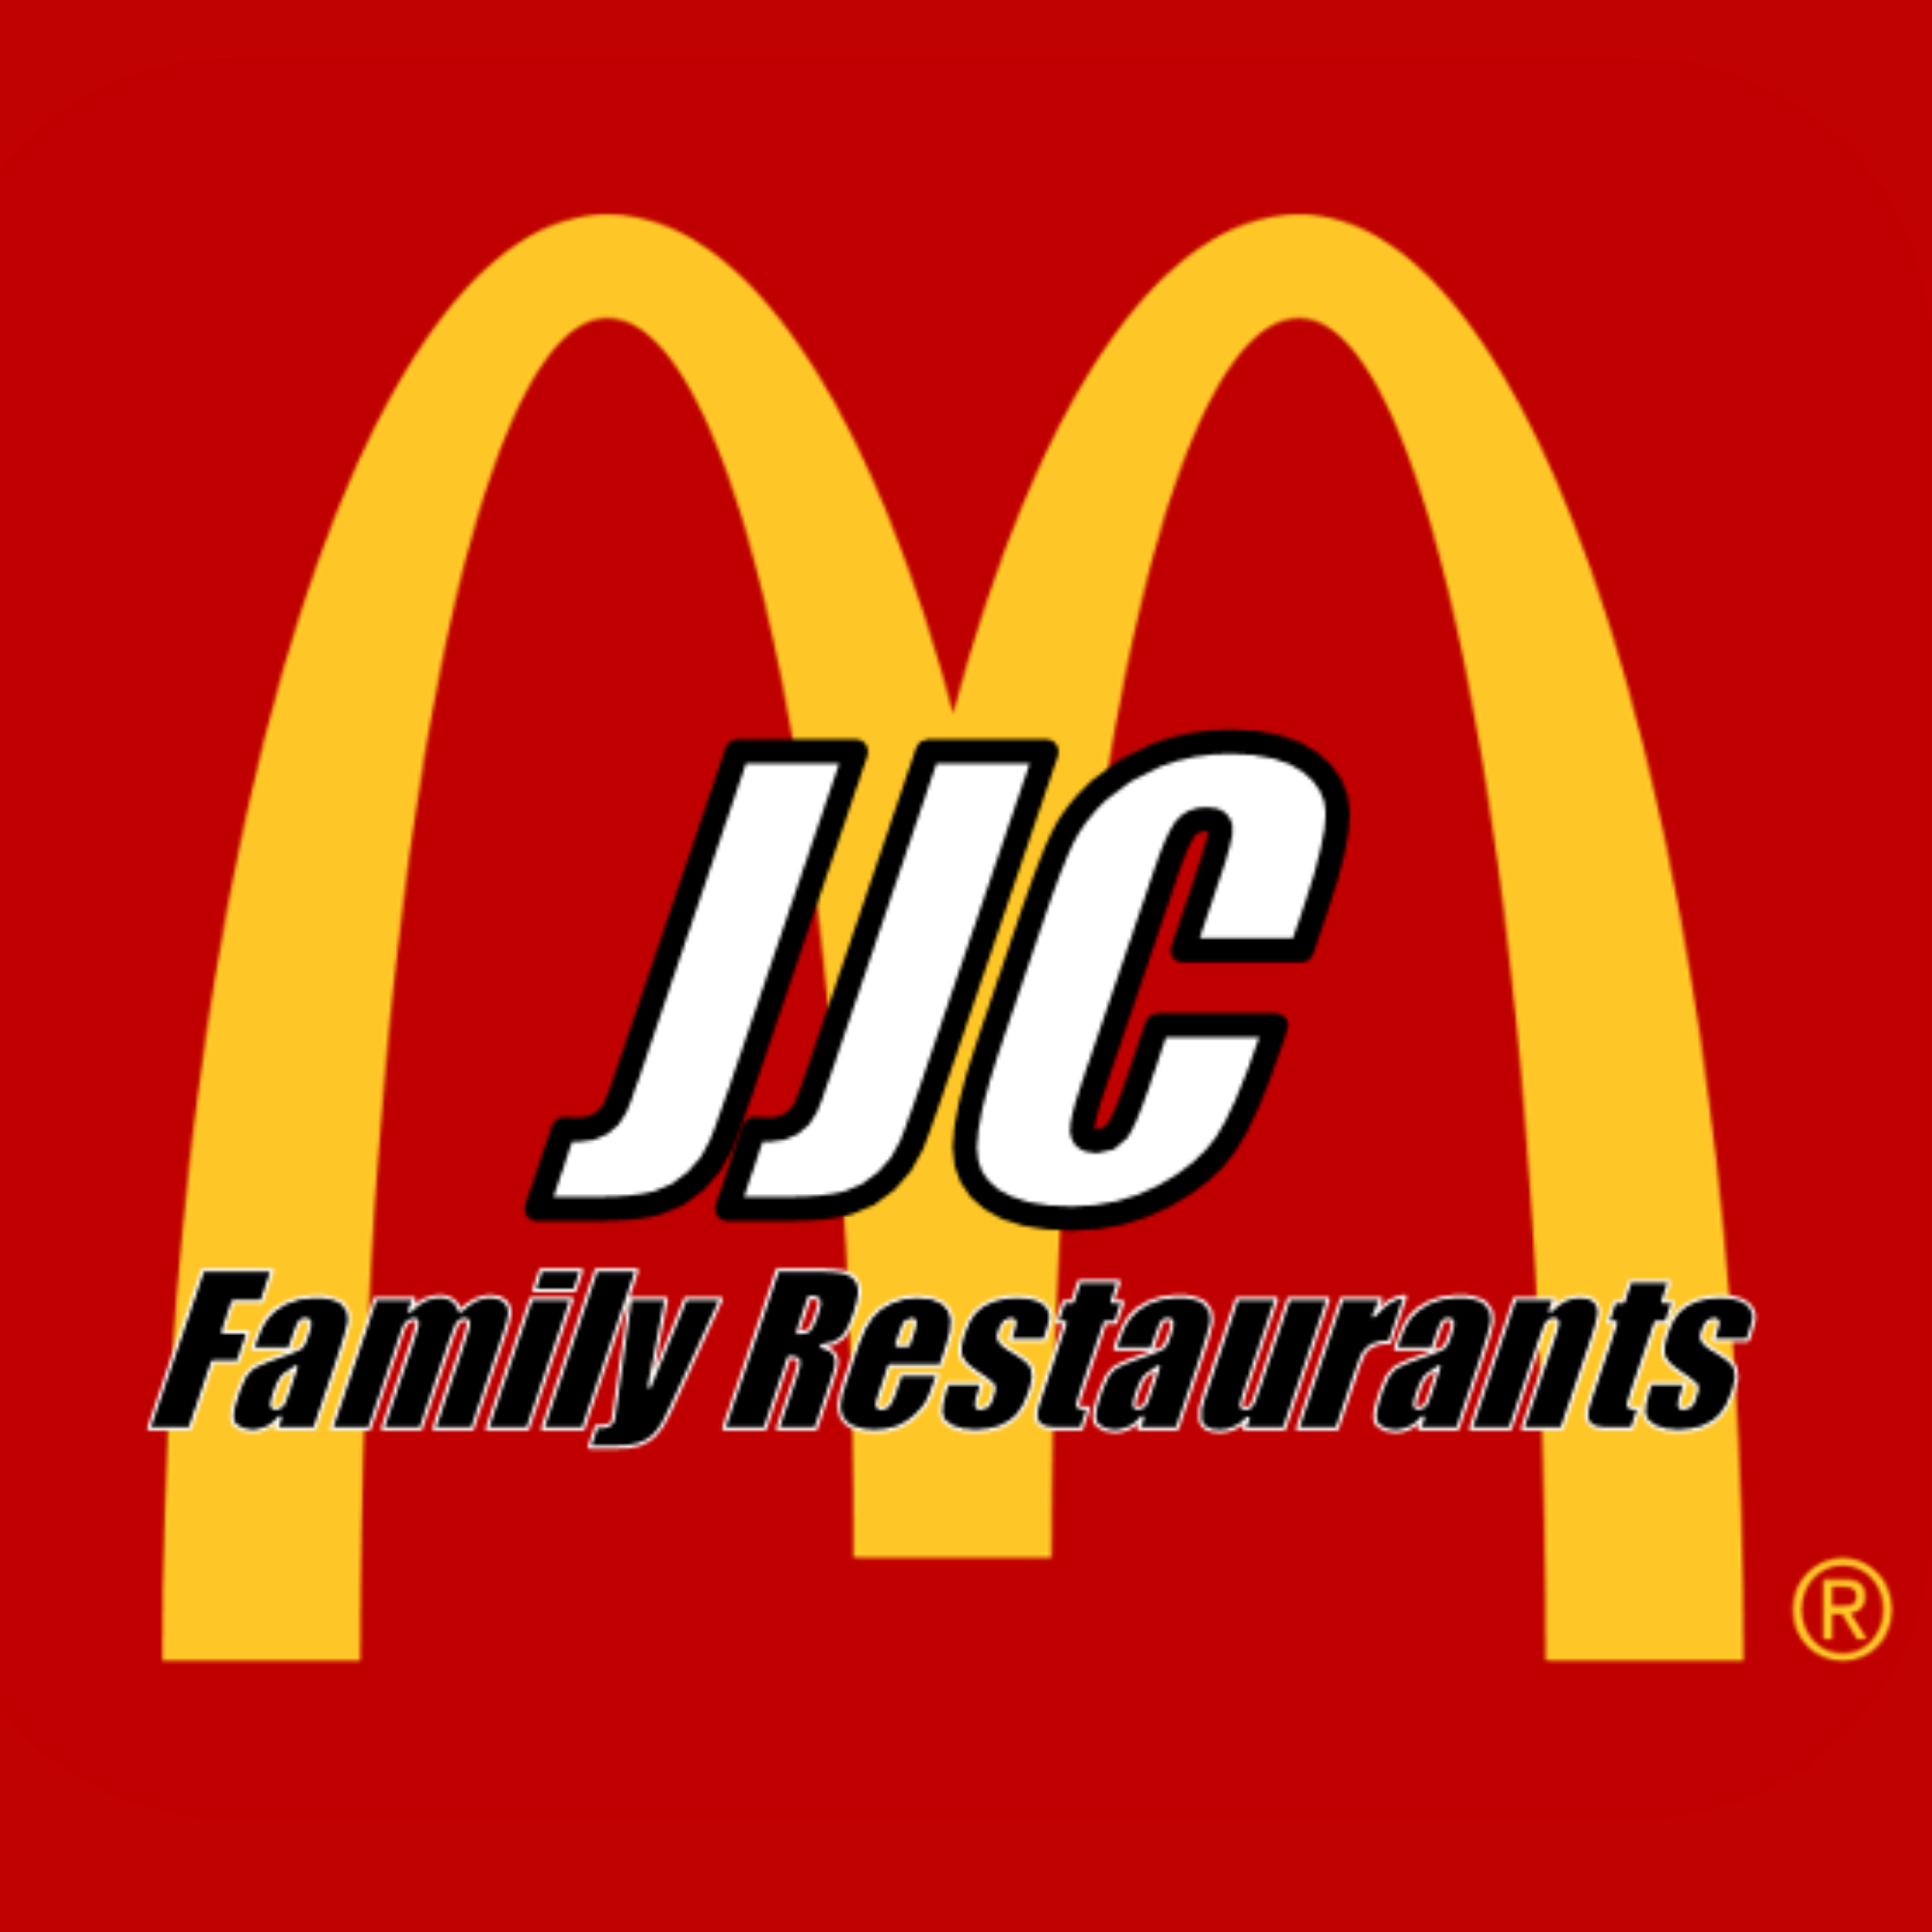 JJC Family Restaurants